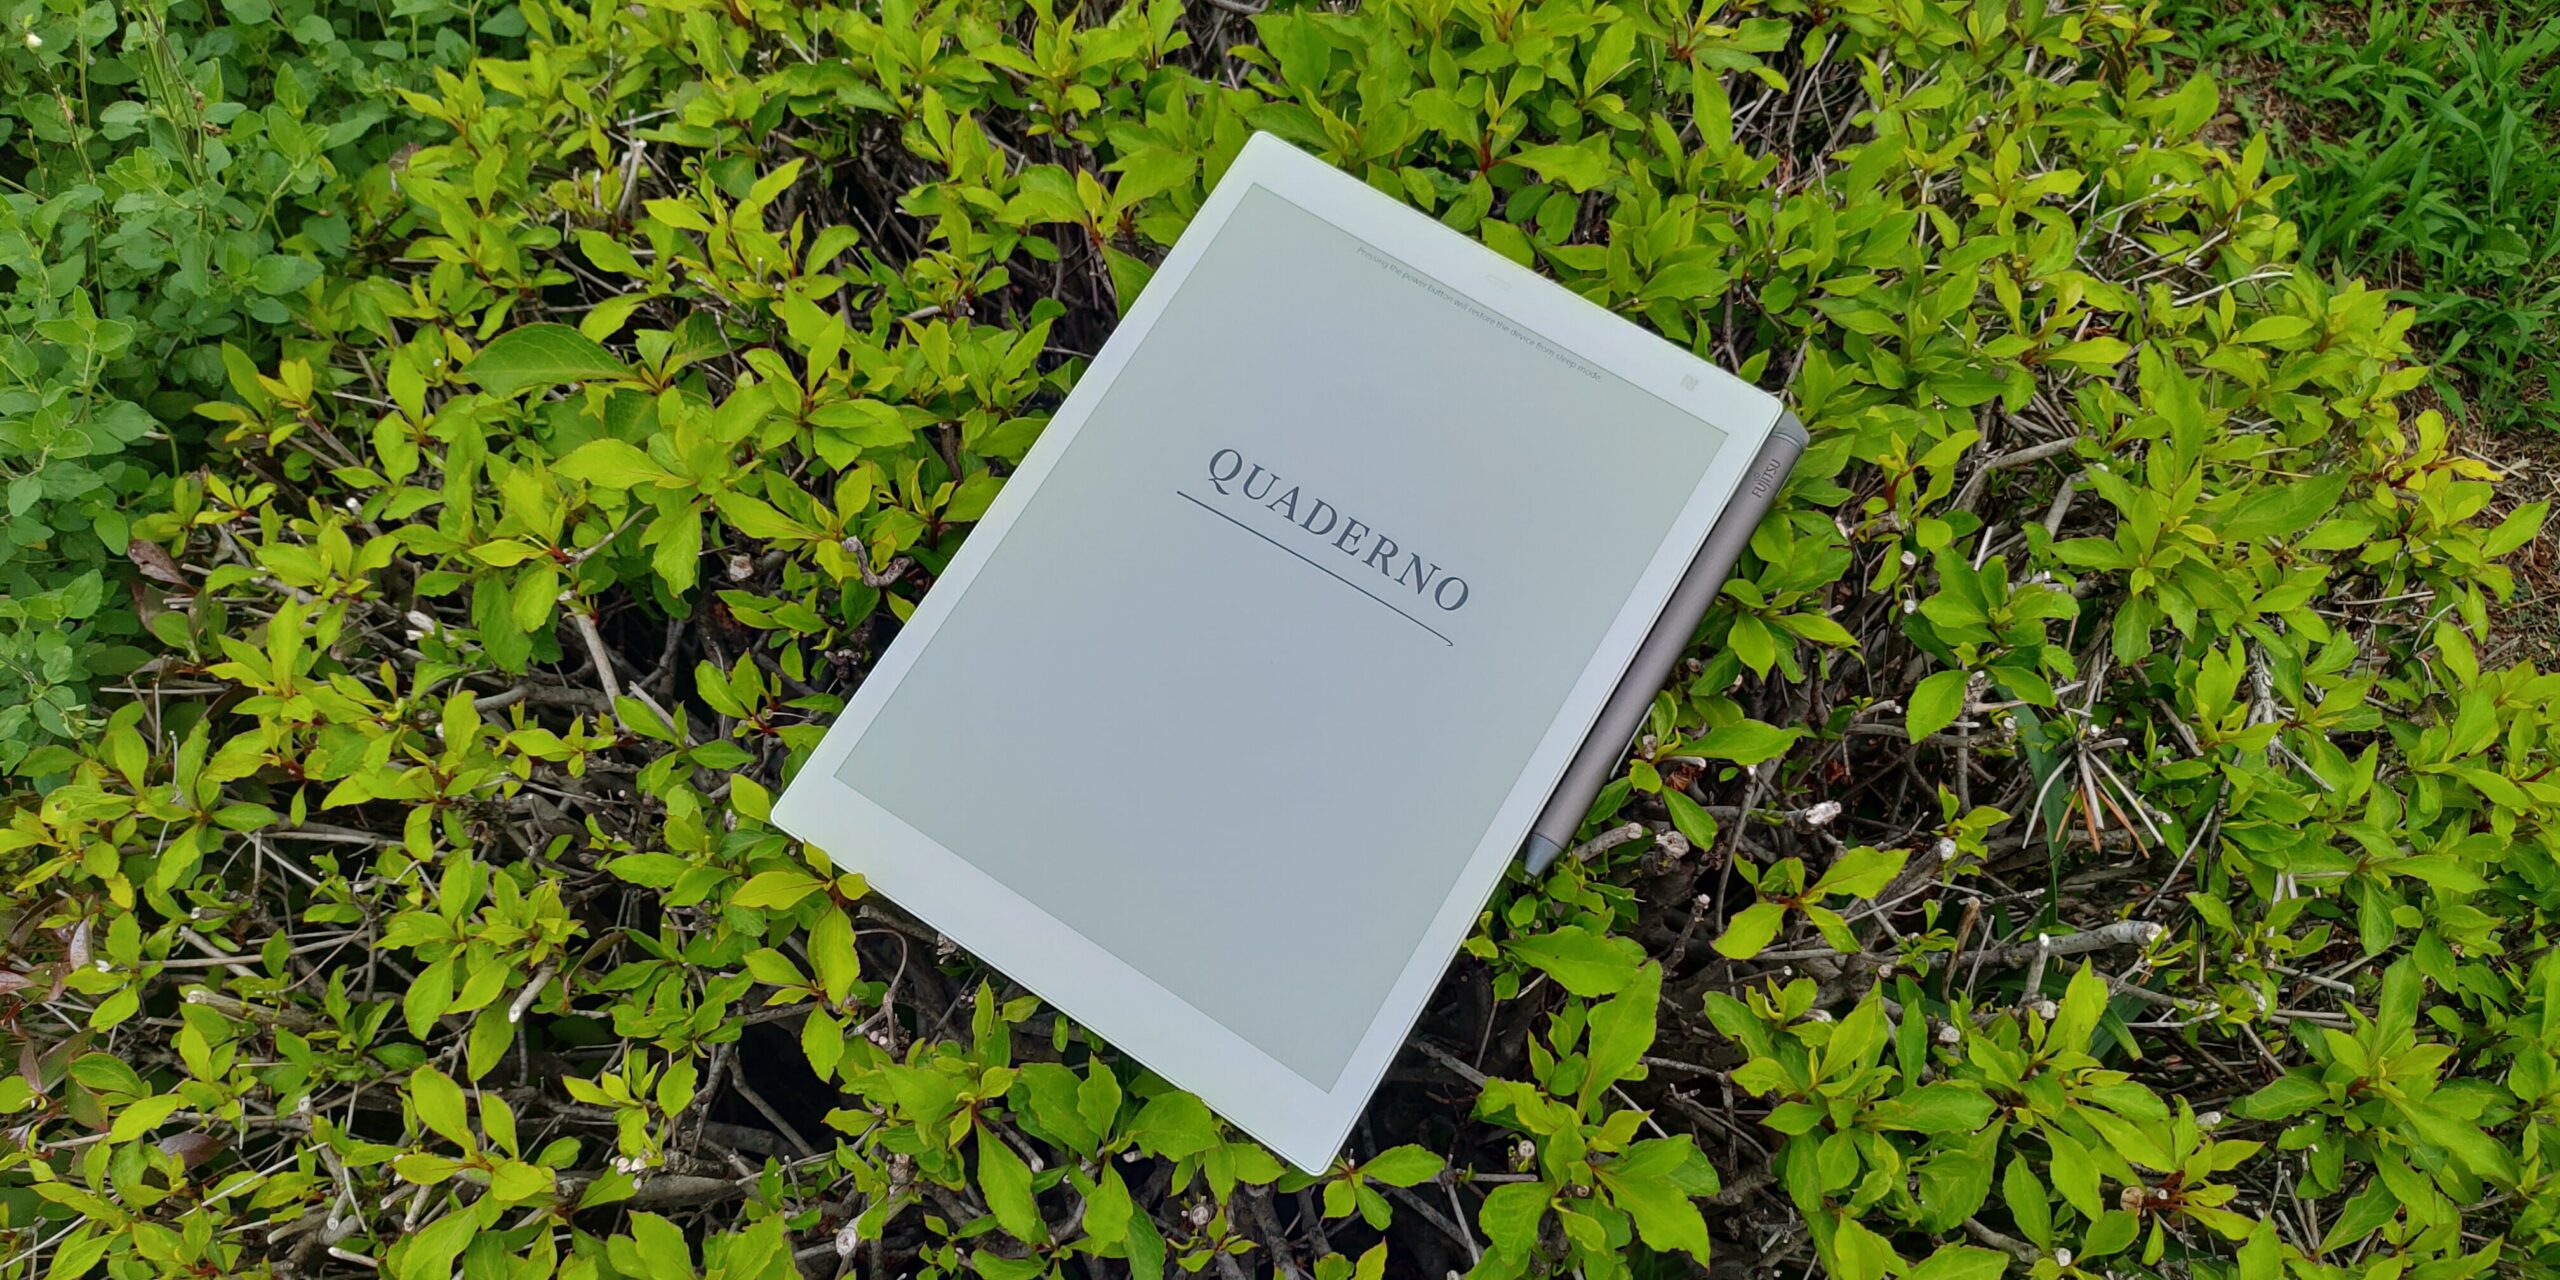 Fujitsu Quaderno A5 2nd Generation - Fujitsu Quaderno Store